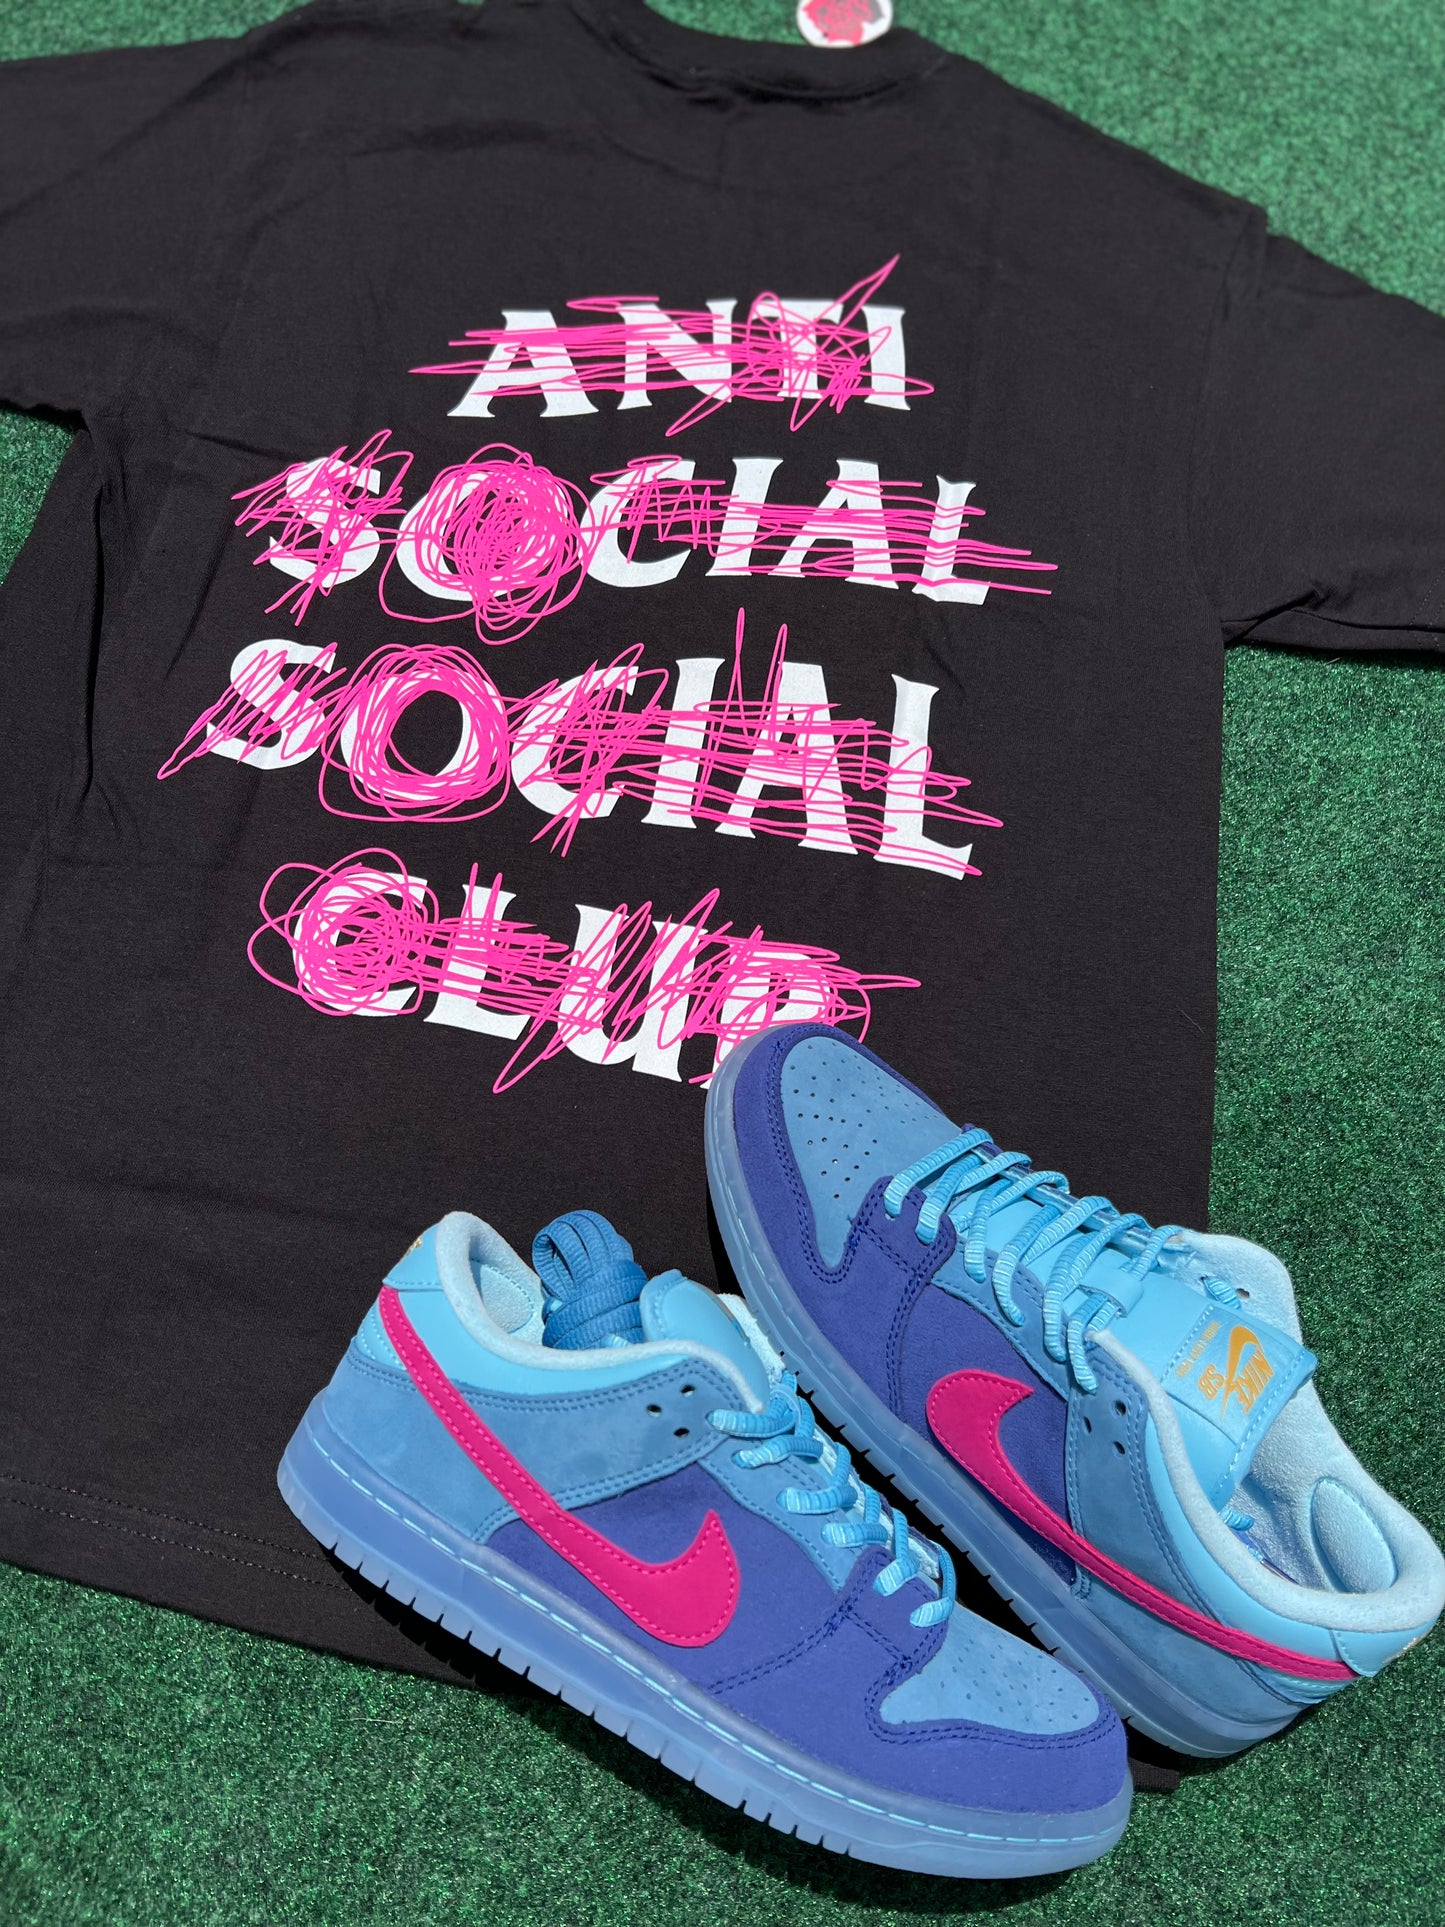 Anti Social Club “Nevermind Black” Tee